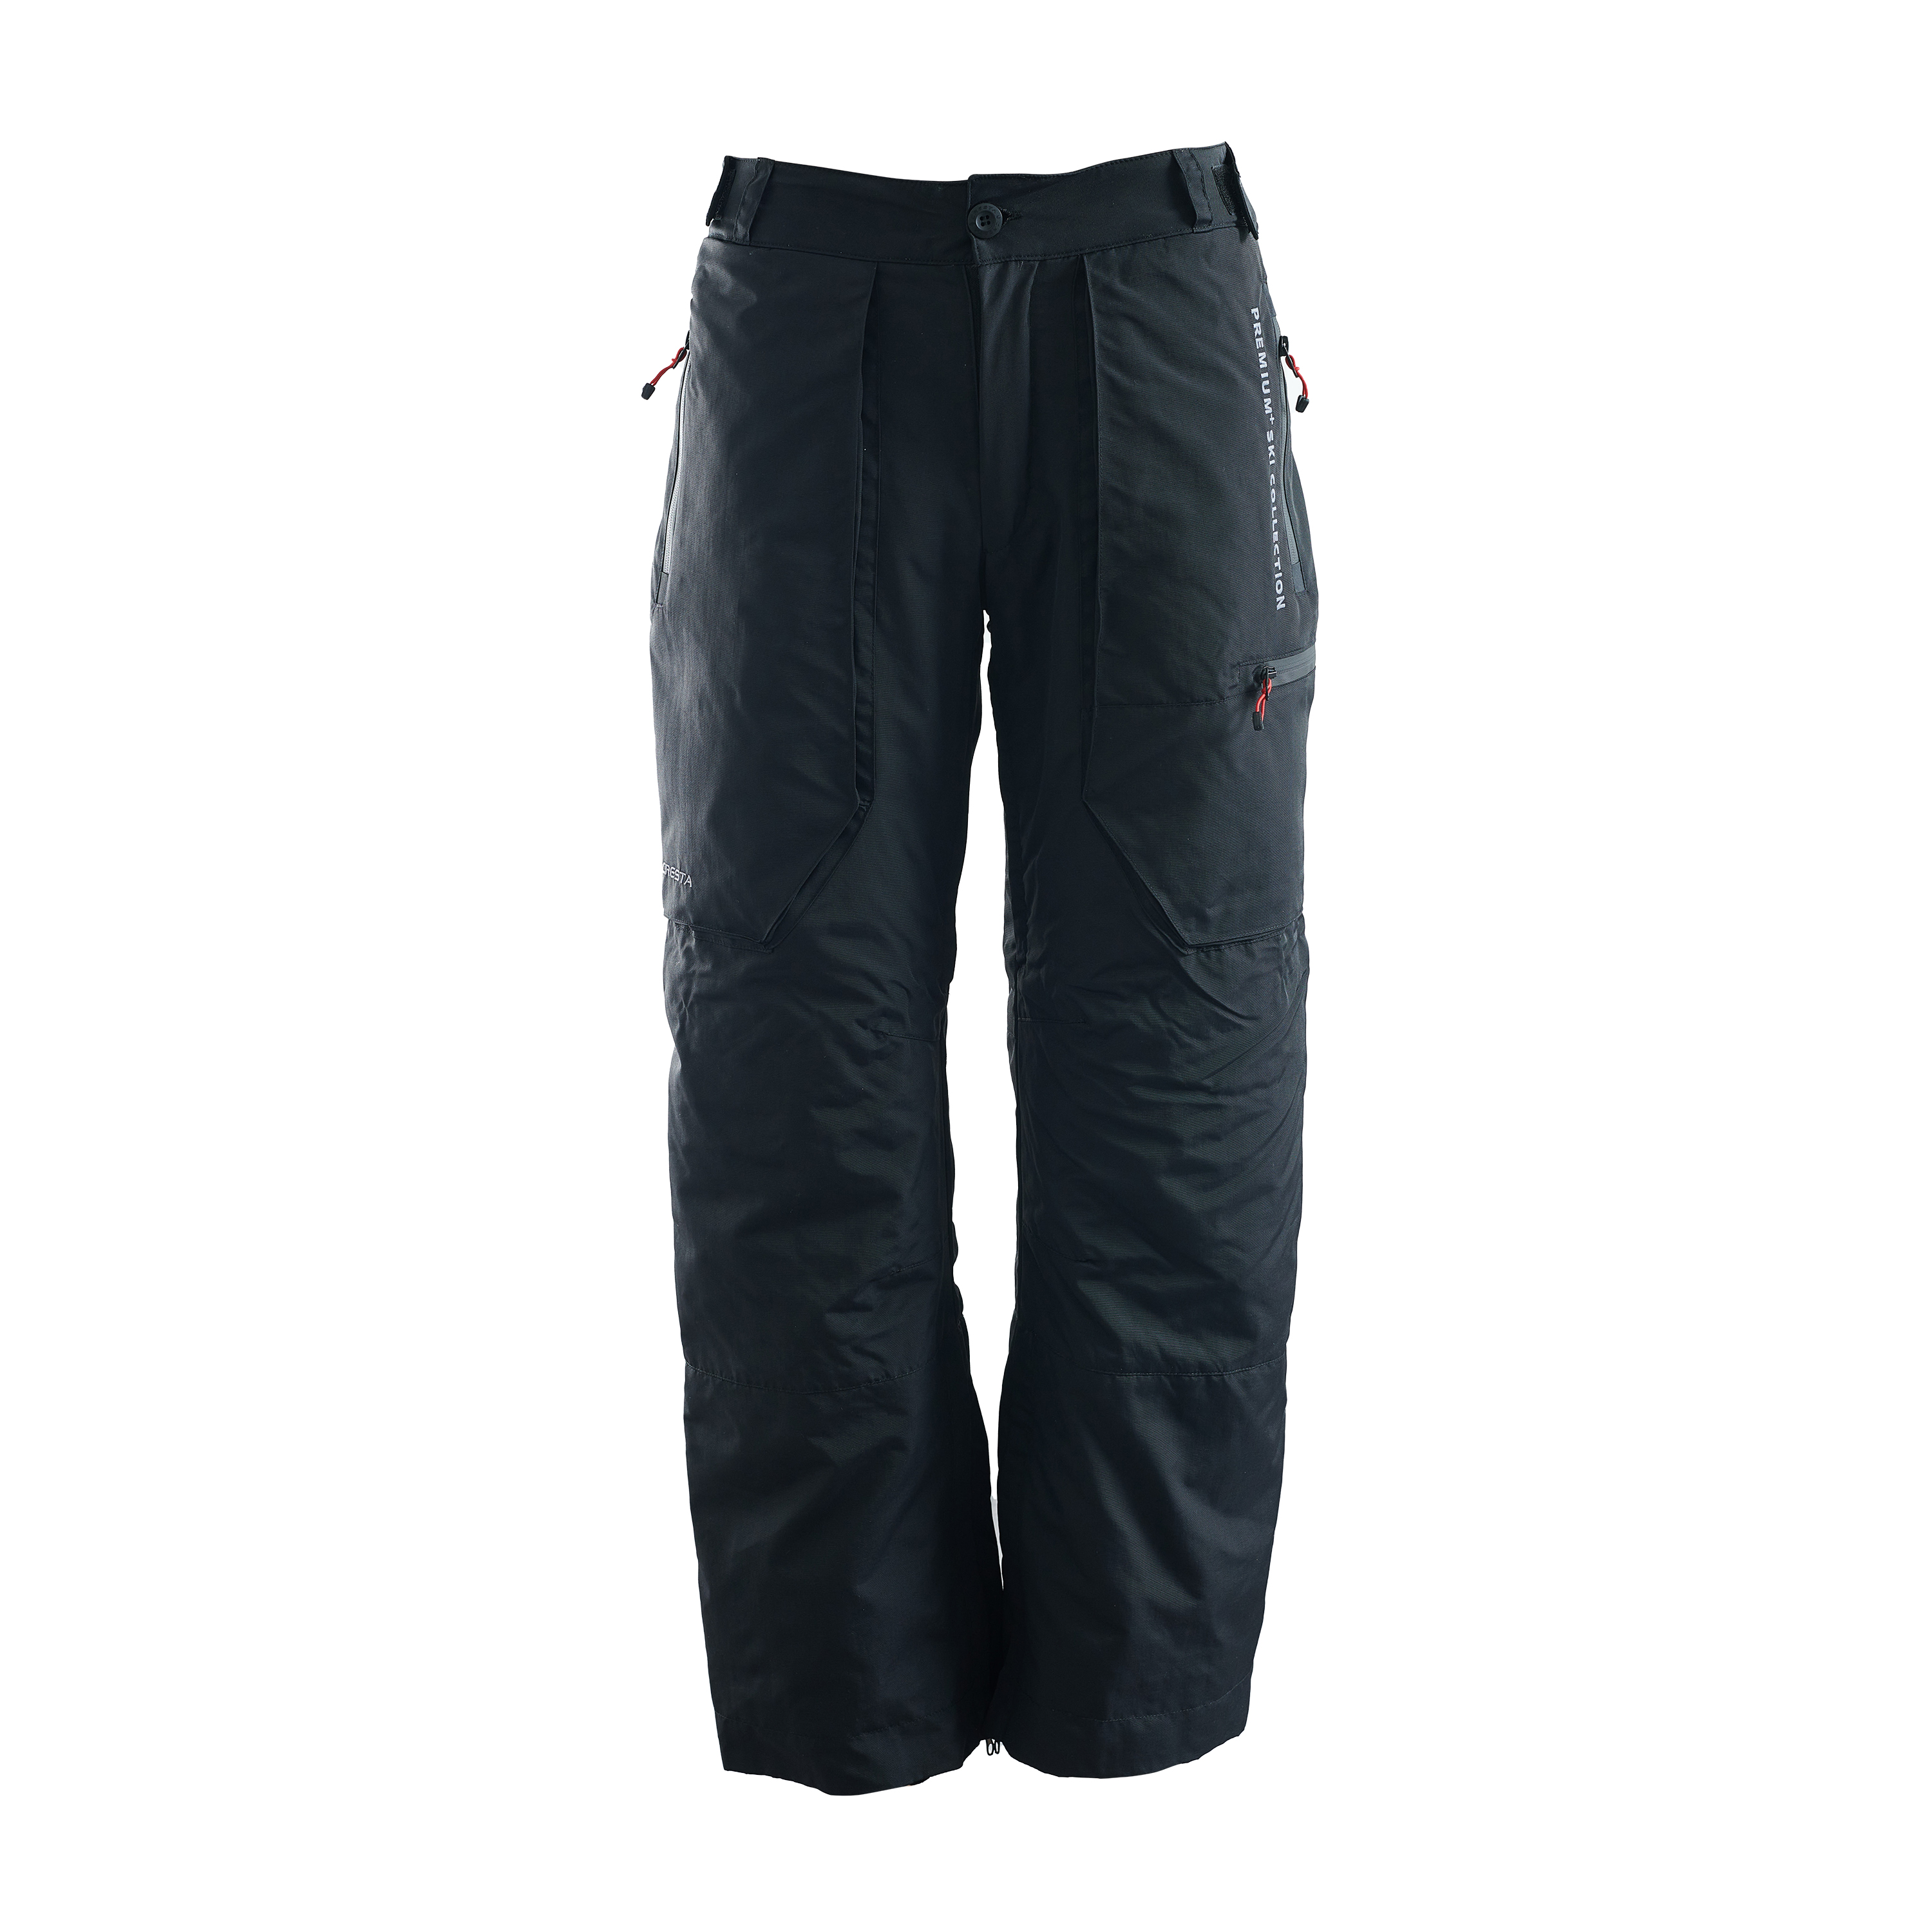 Men's Ski & Snowboard Pants - Premium Ski Collection